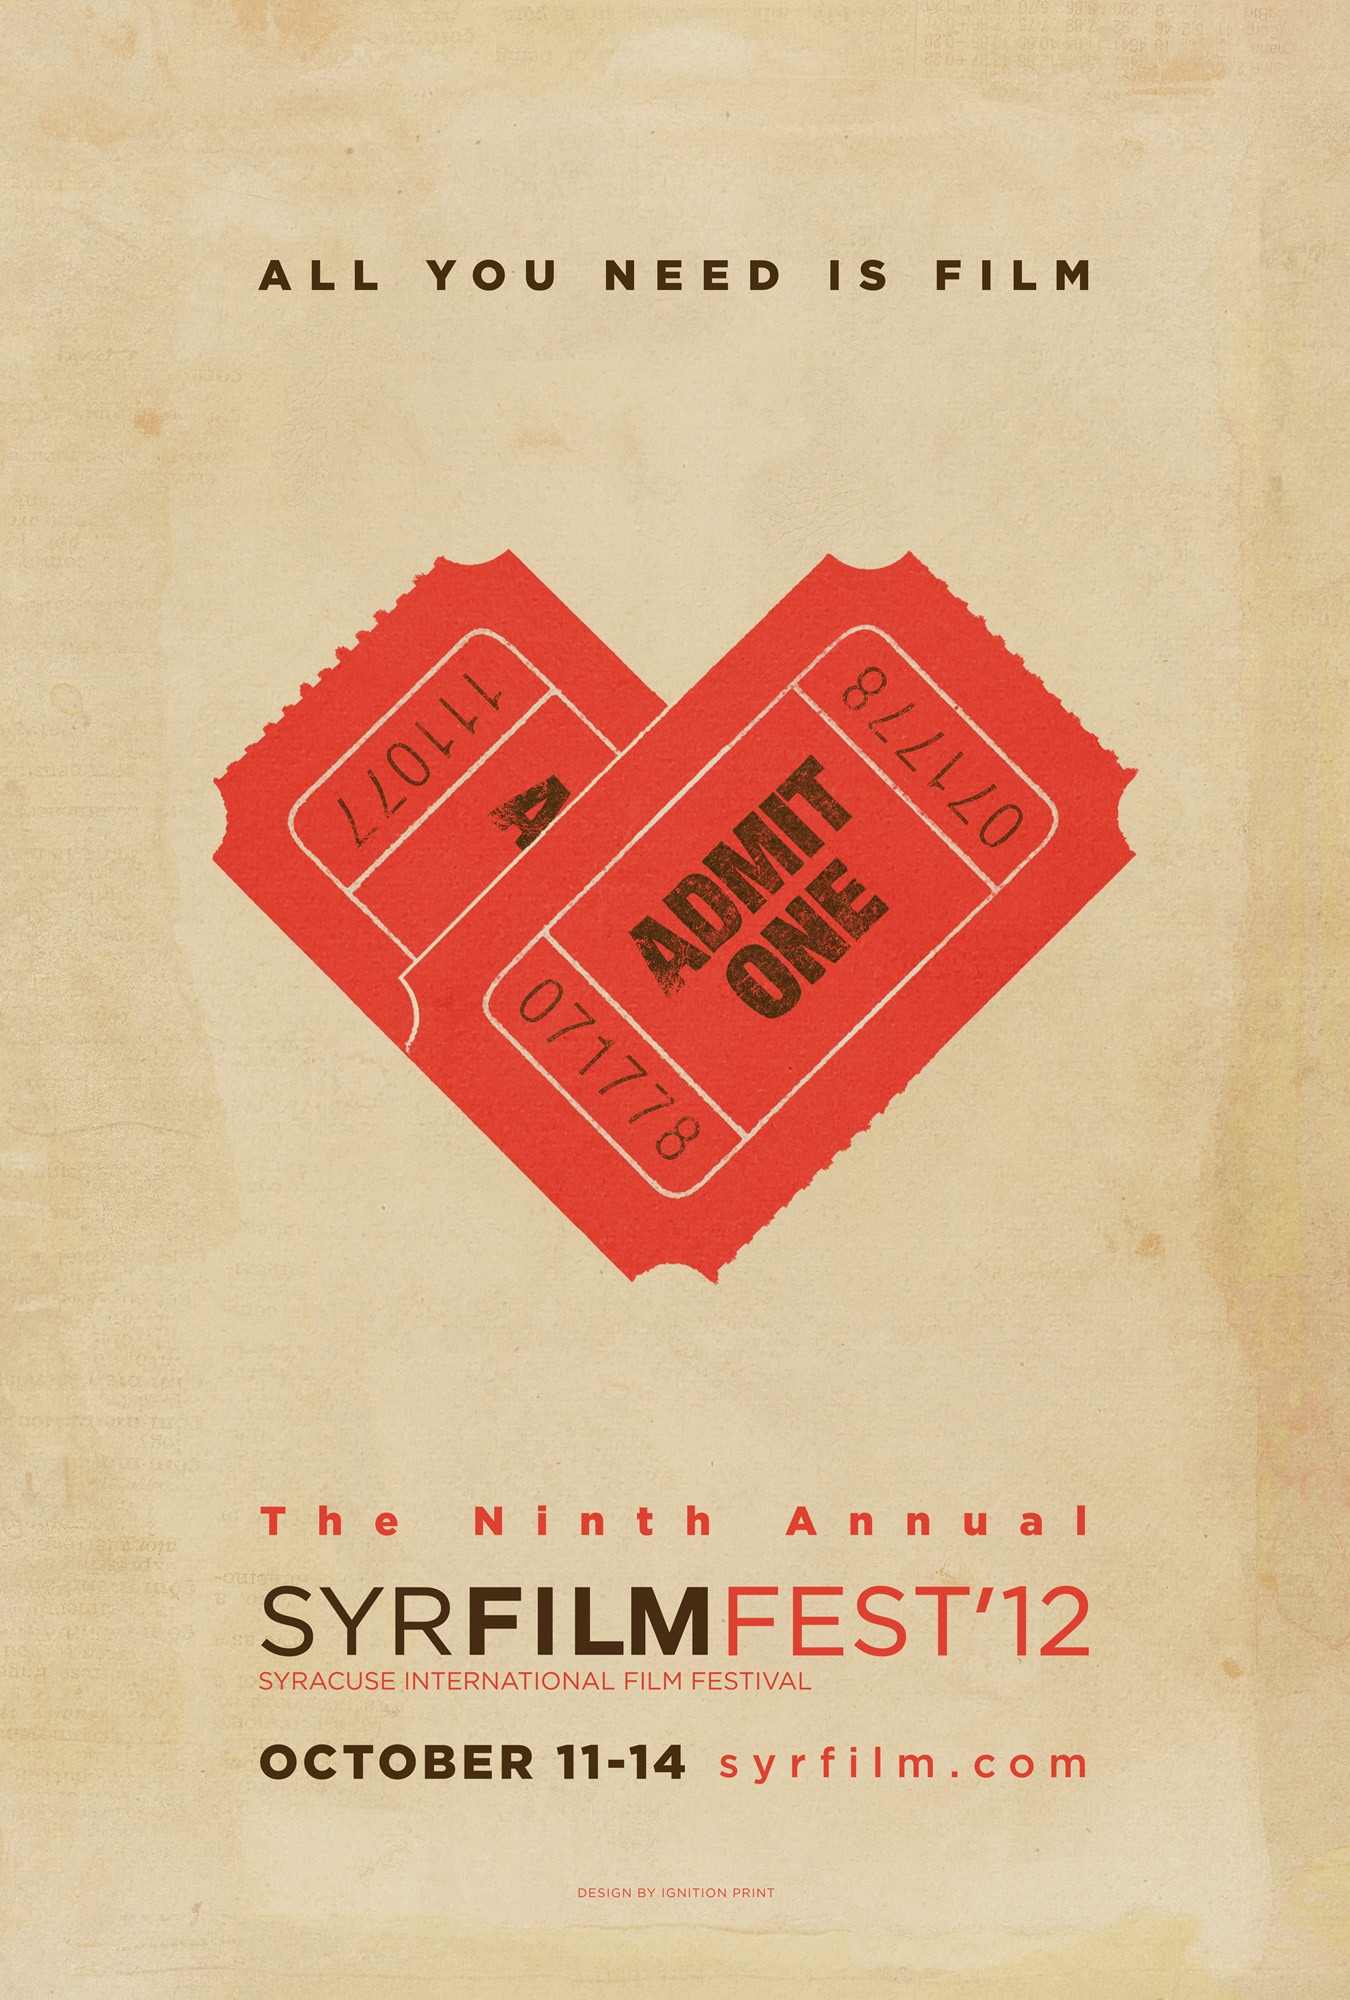 Mega Sized TV Poster Image for Syracuse International Film Festival 